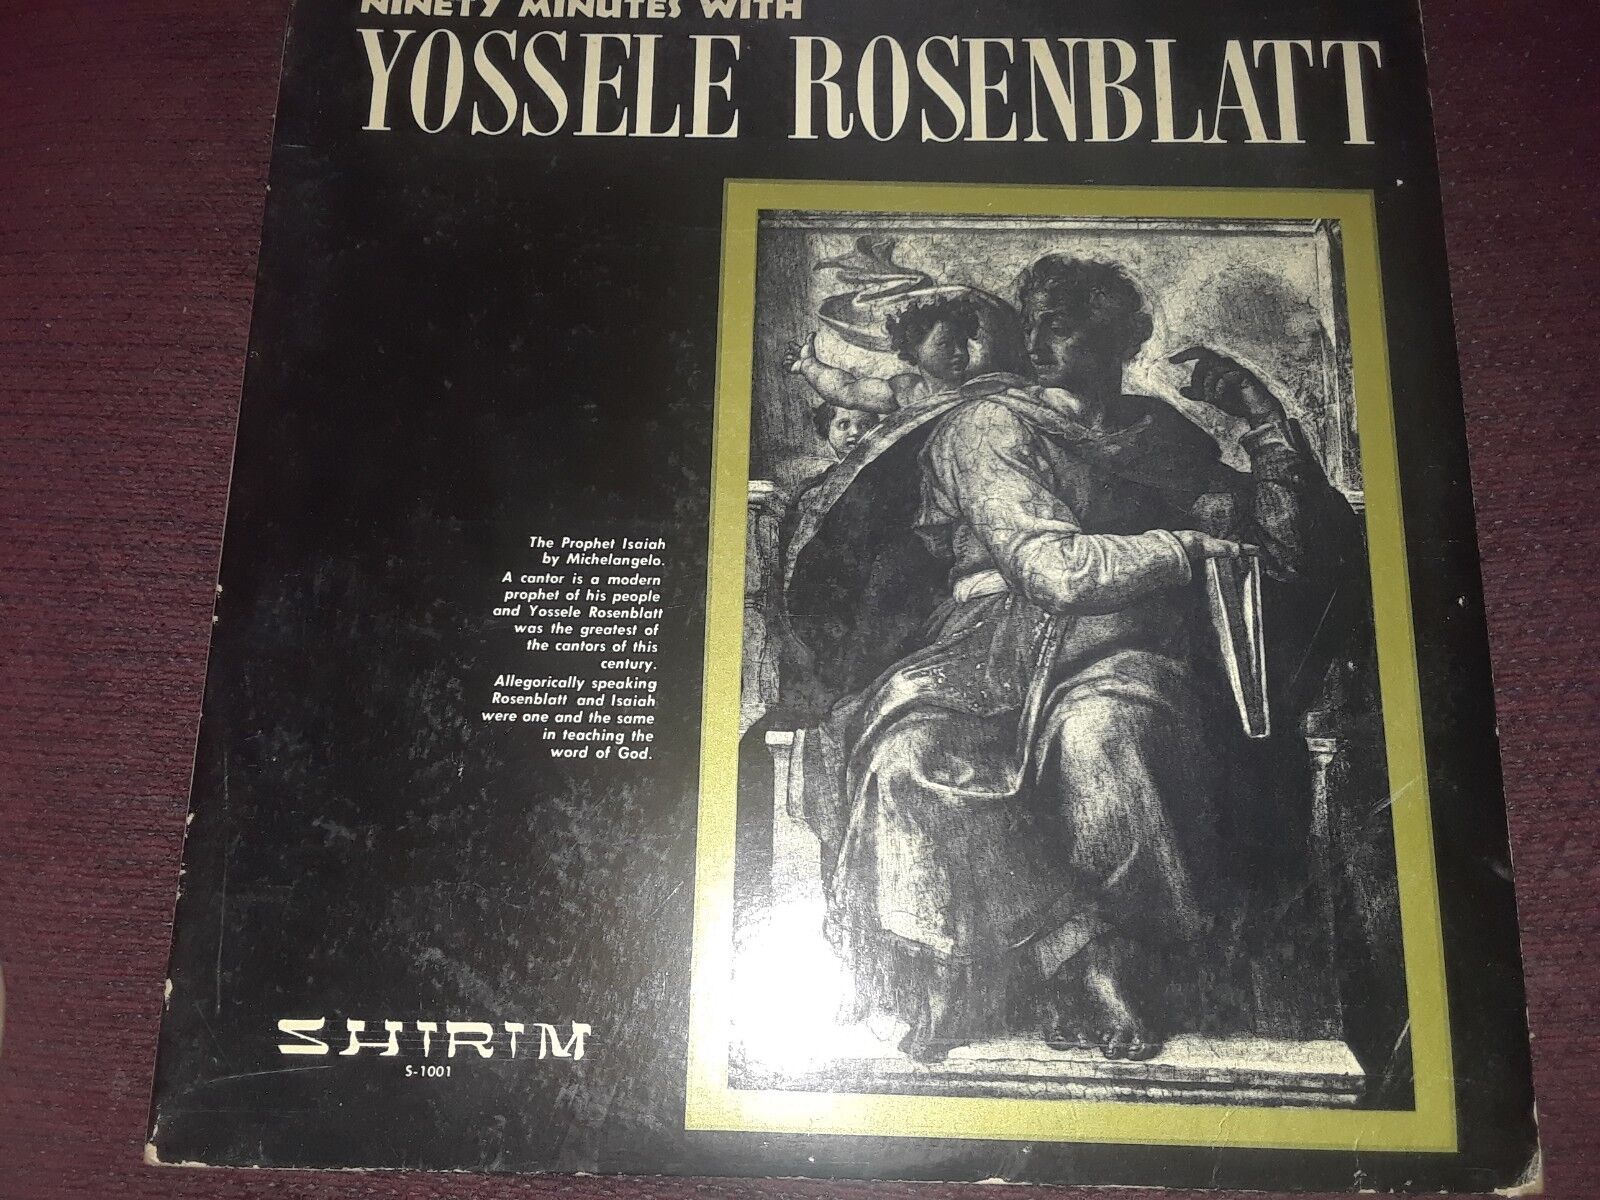 RARE ORIGINAL 1950's 90 MINUTES WITH YOSSELE ROSENBLATT SHIRIM 2 RECORD SET